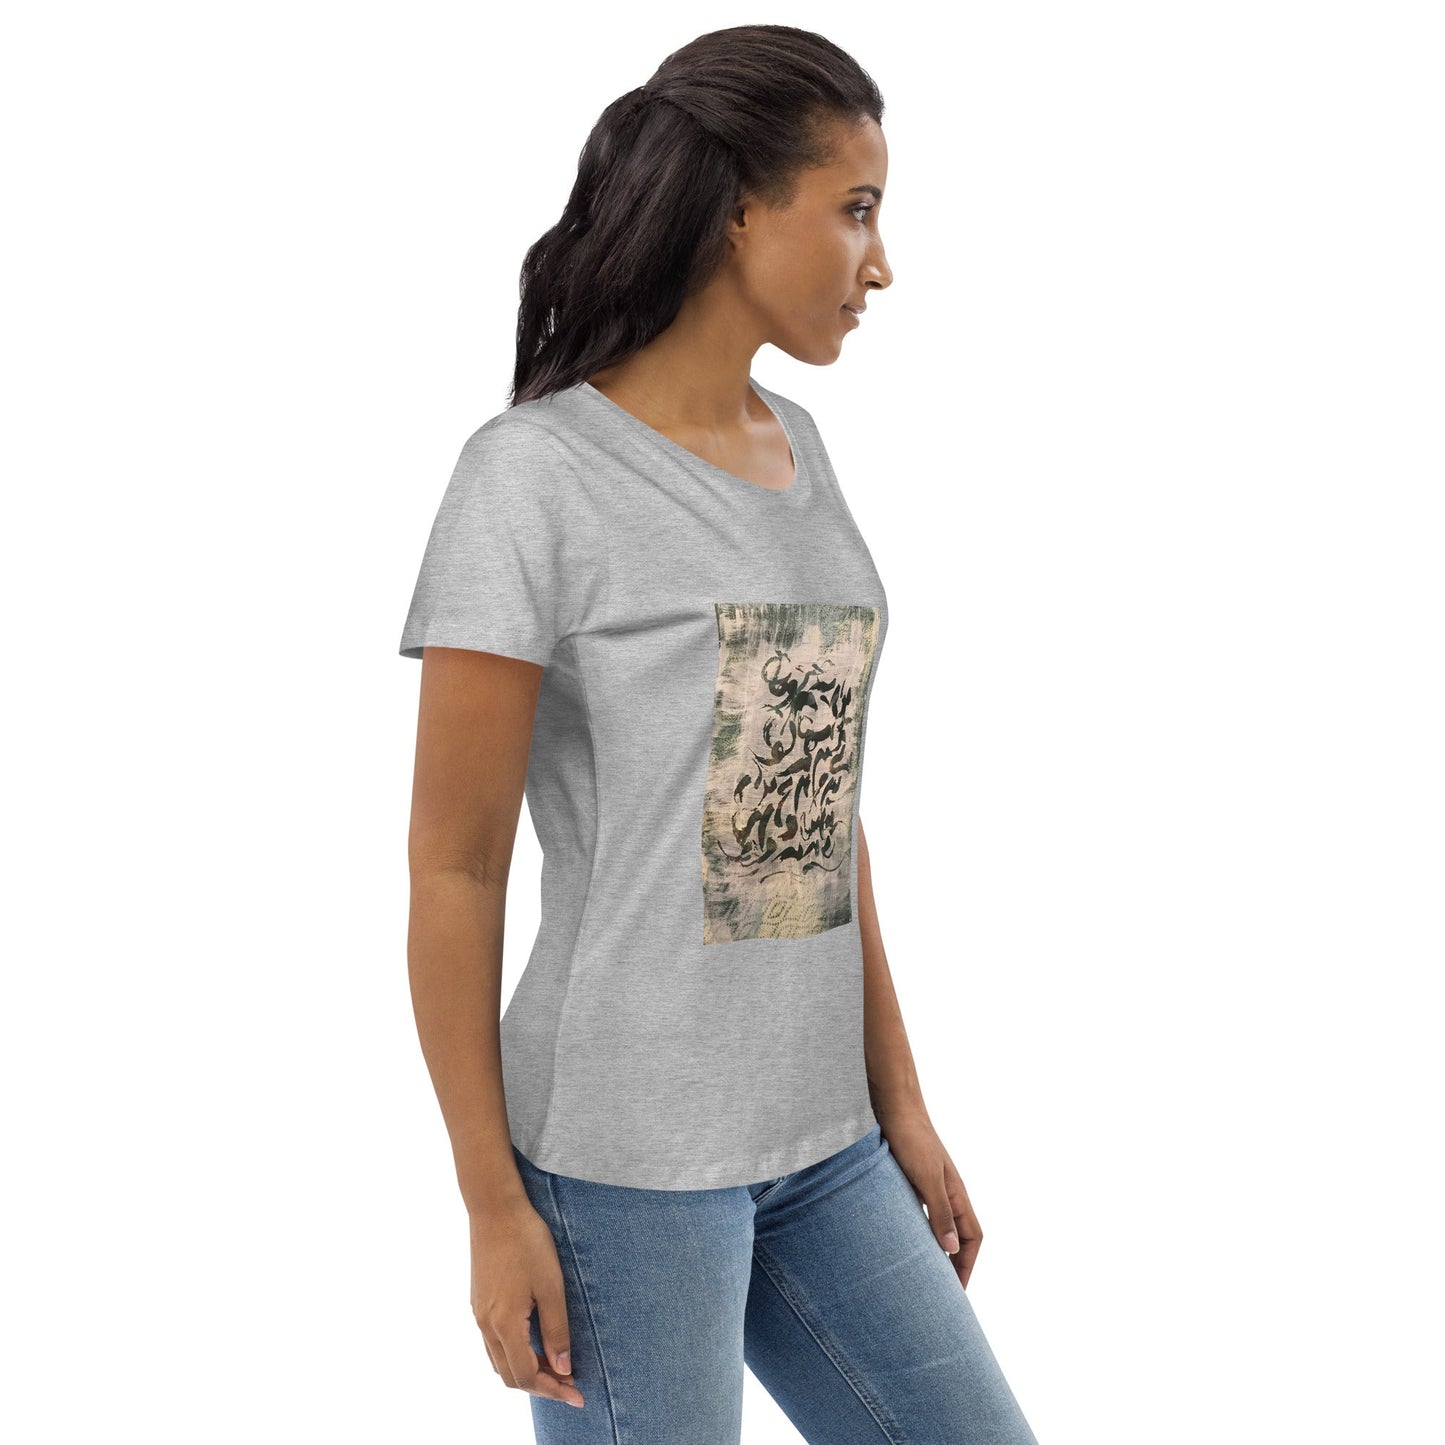 THE TWIST Women's Eco T-Shirt - Bonotee